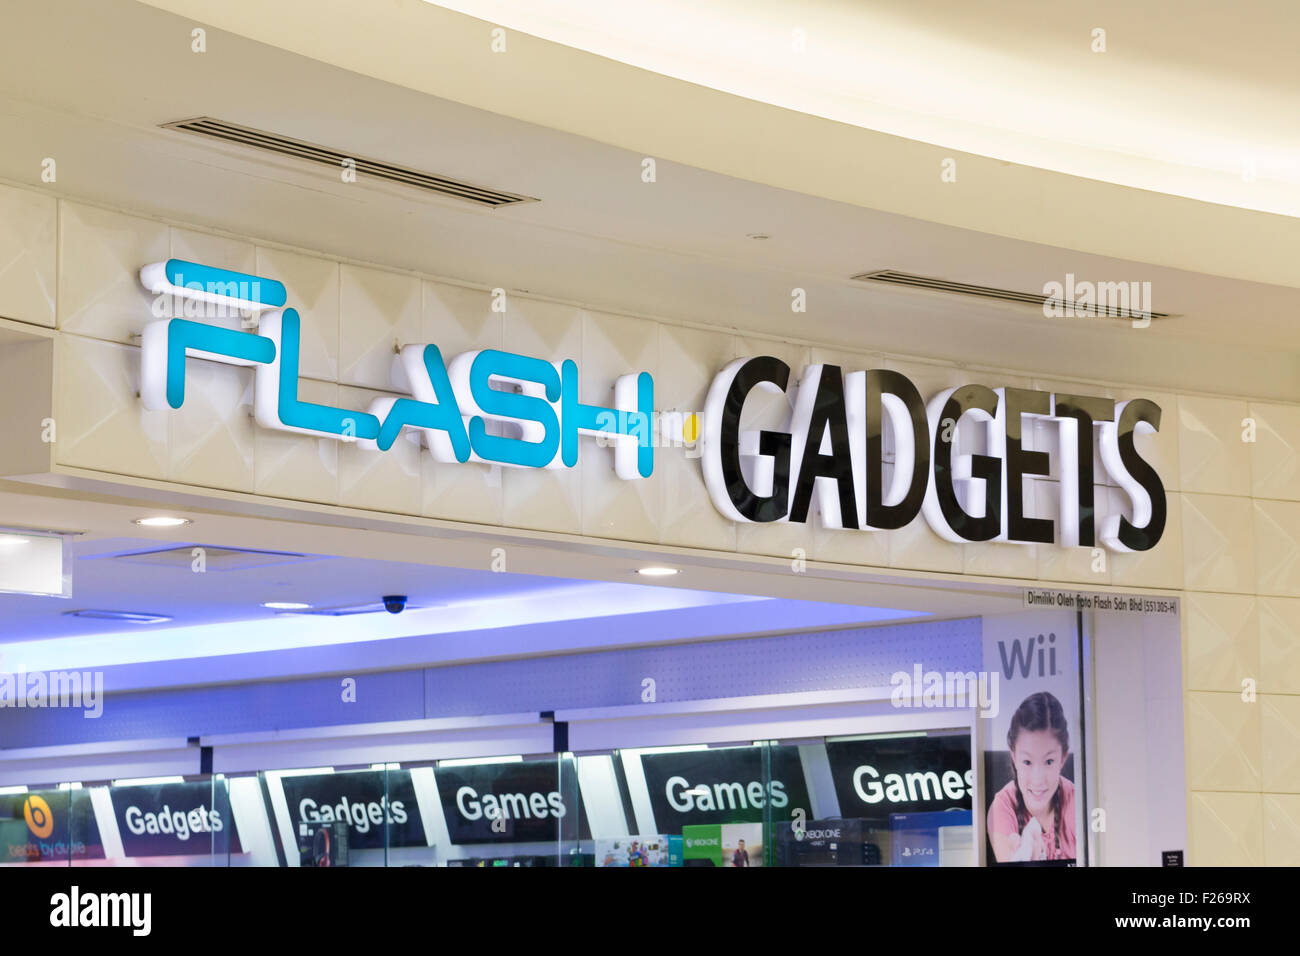 Flash gadgets shop Stock Photo